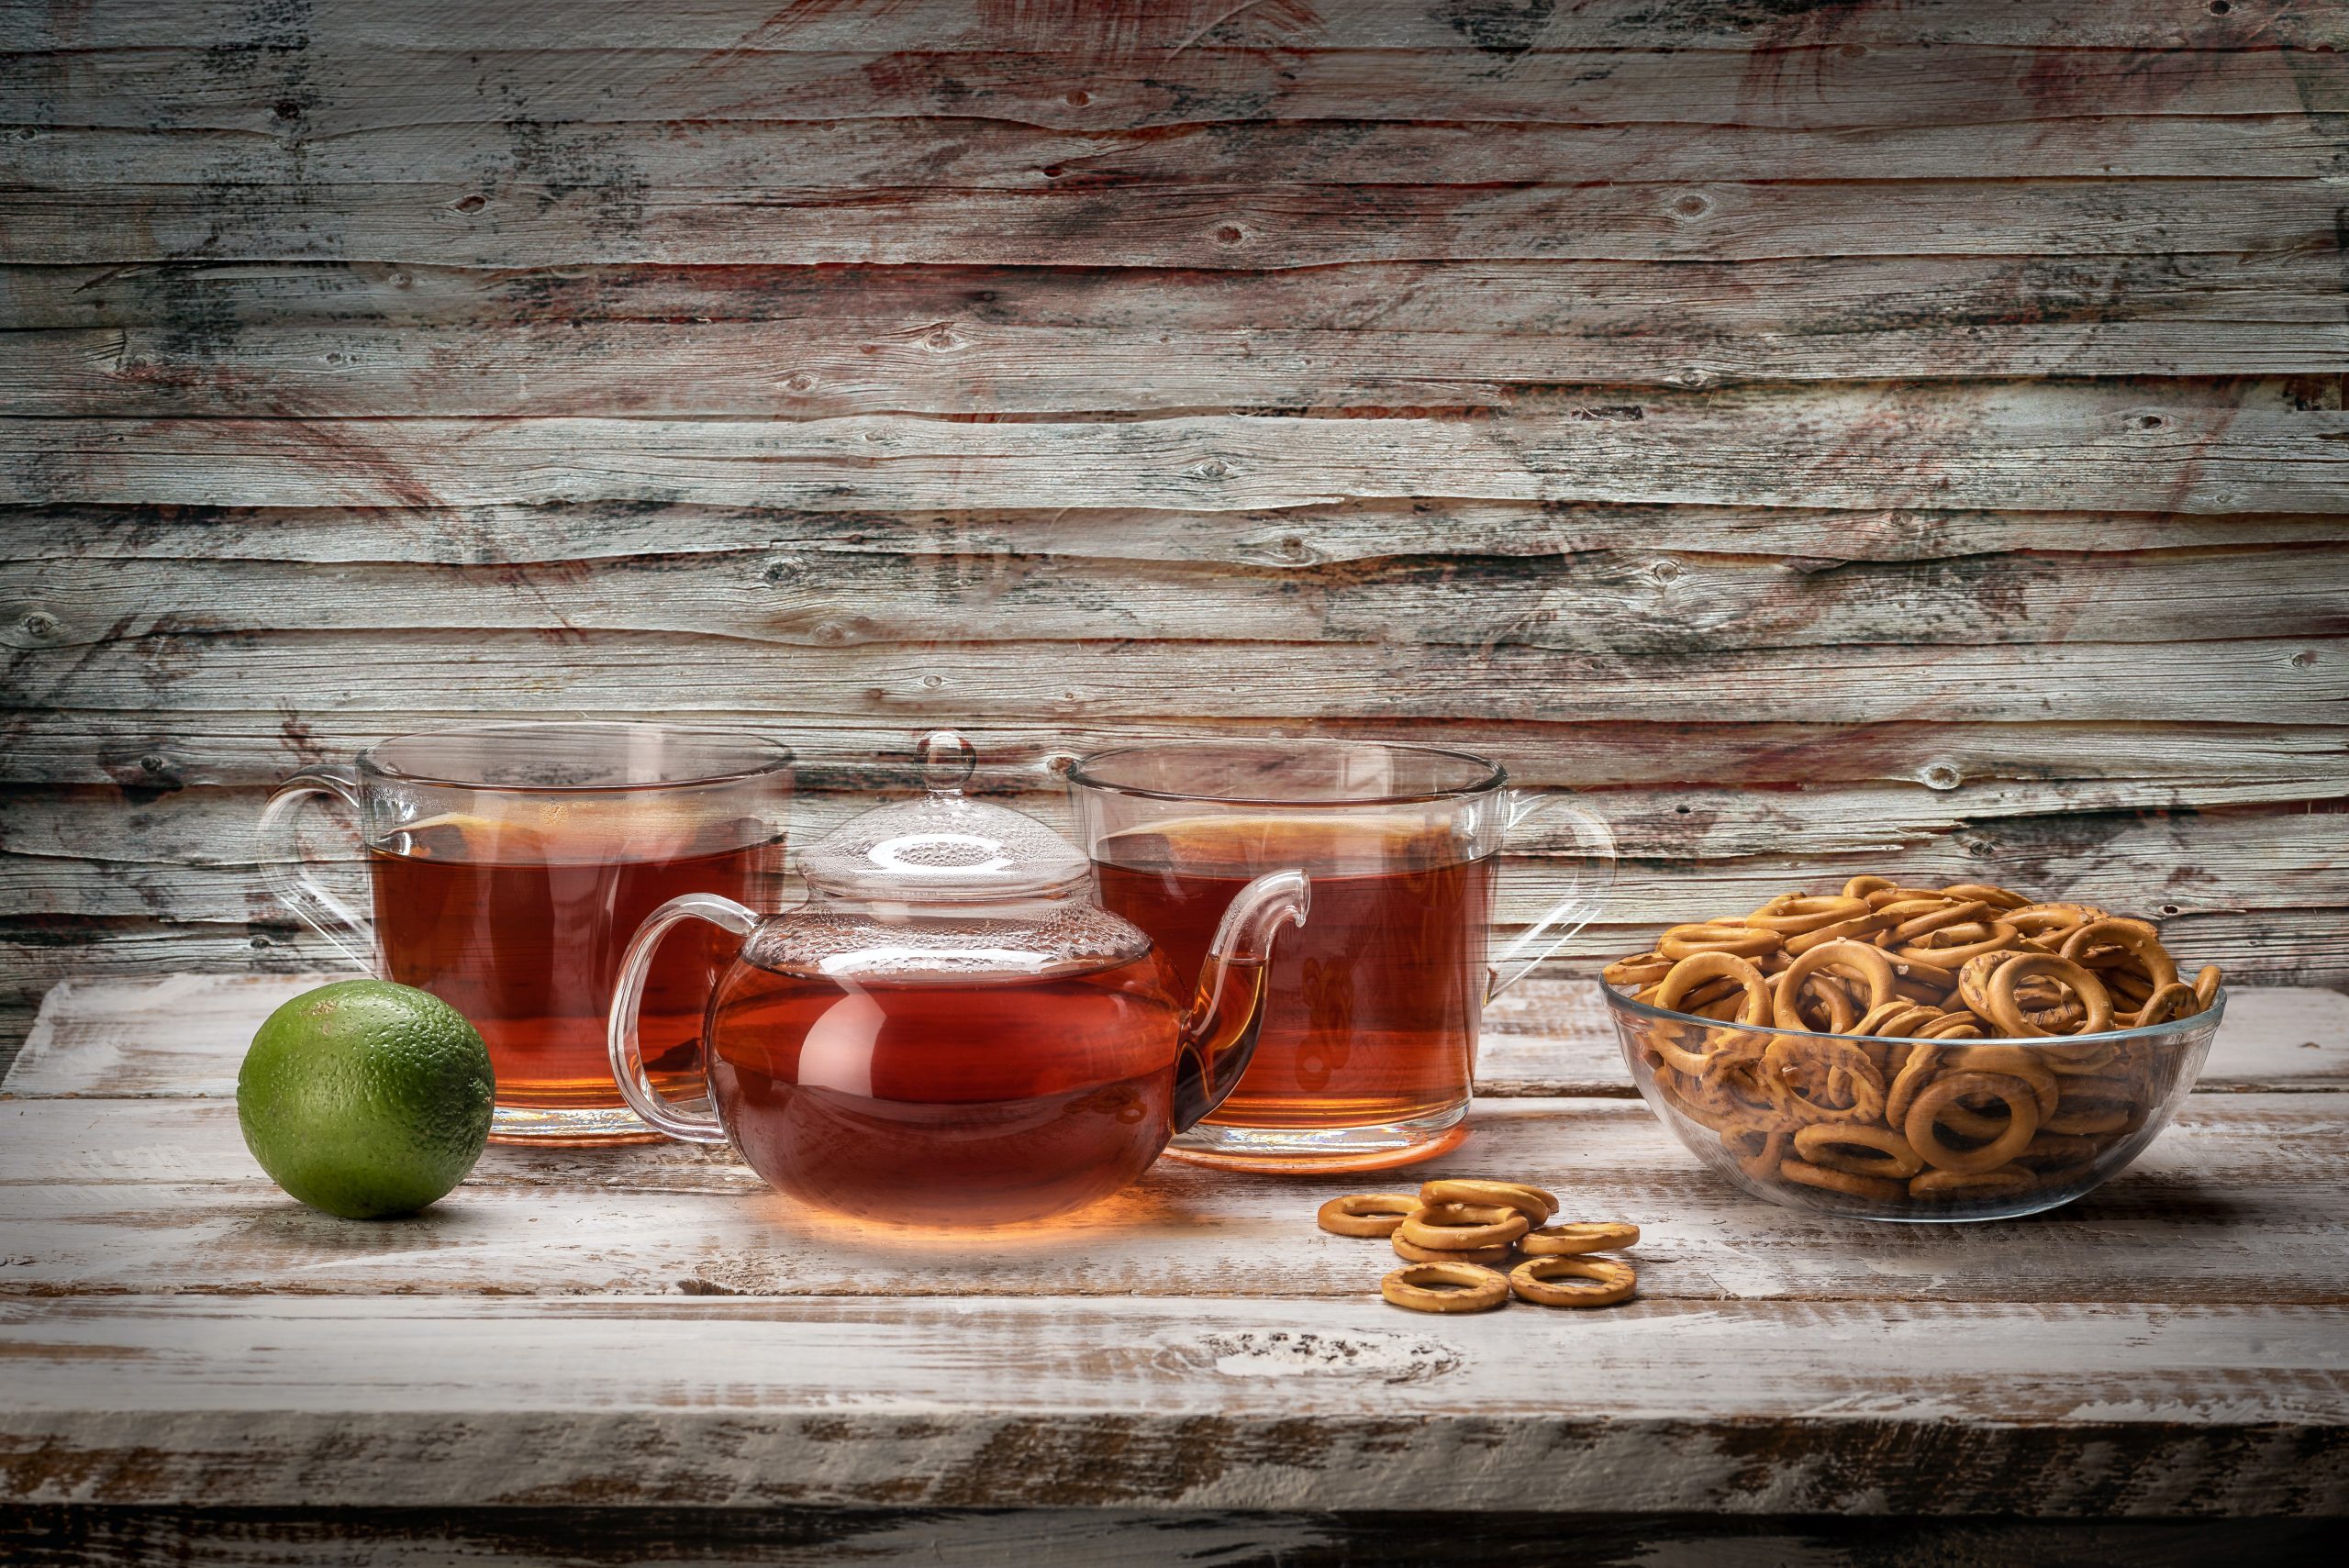 oregano tea benefits